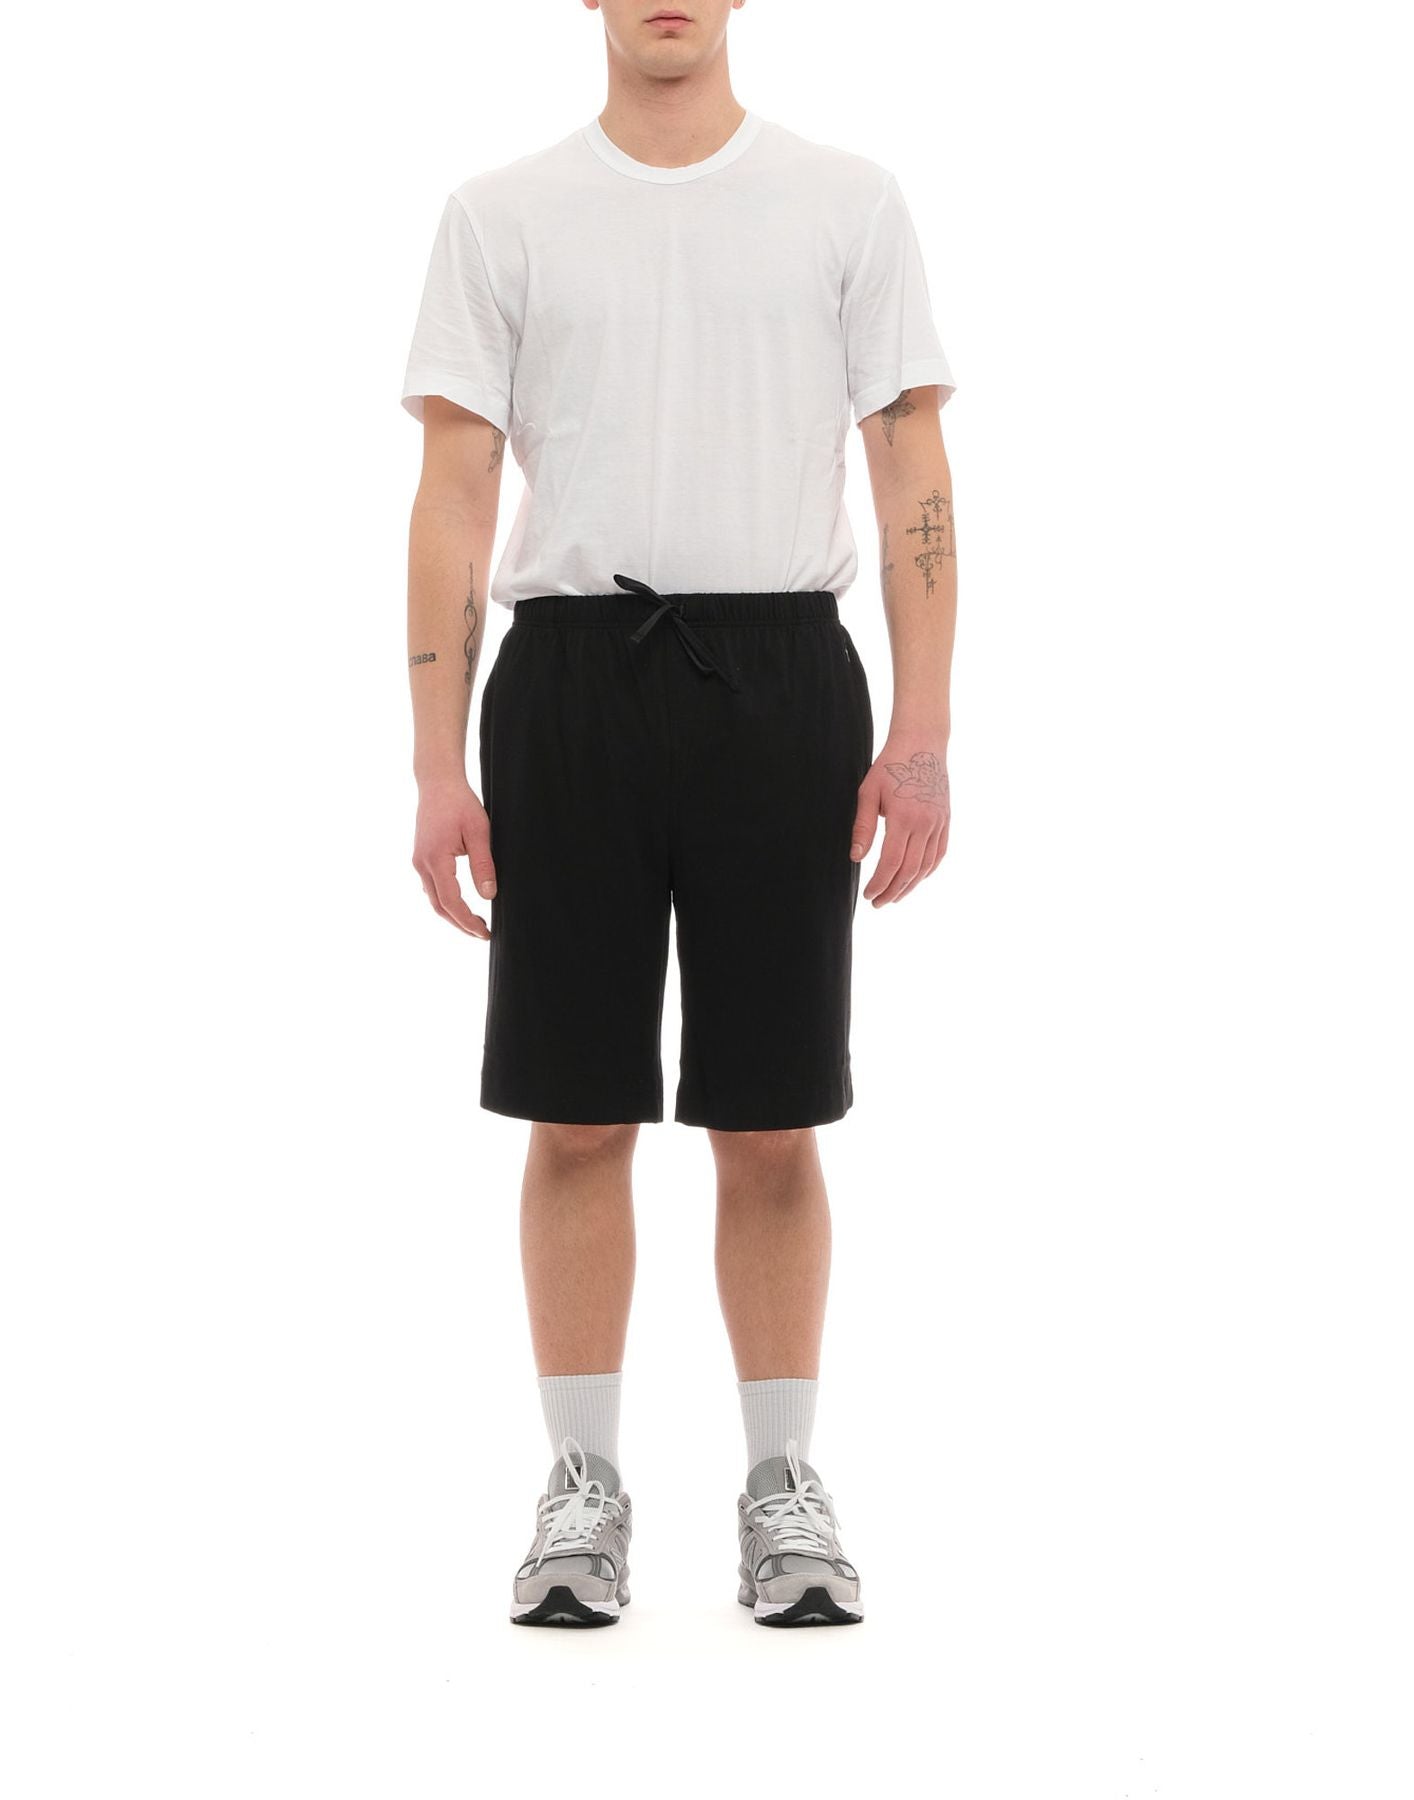 Pantalones cortos para hombre 714844761002 BLACK Polo Ralph Lauren